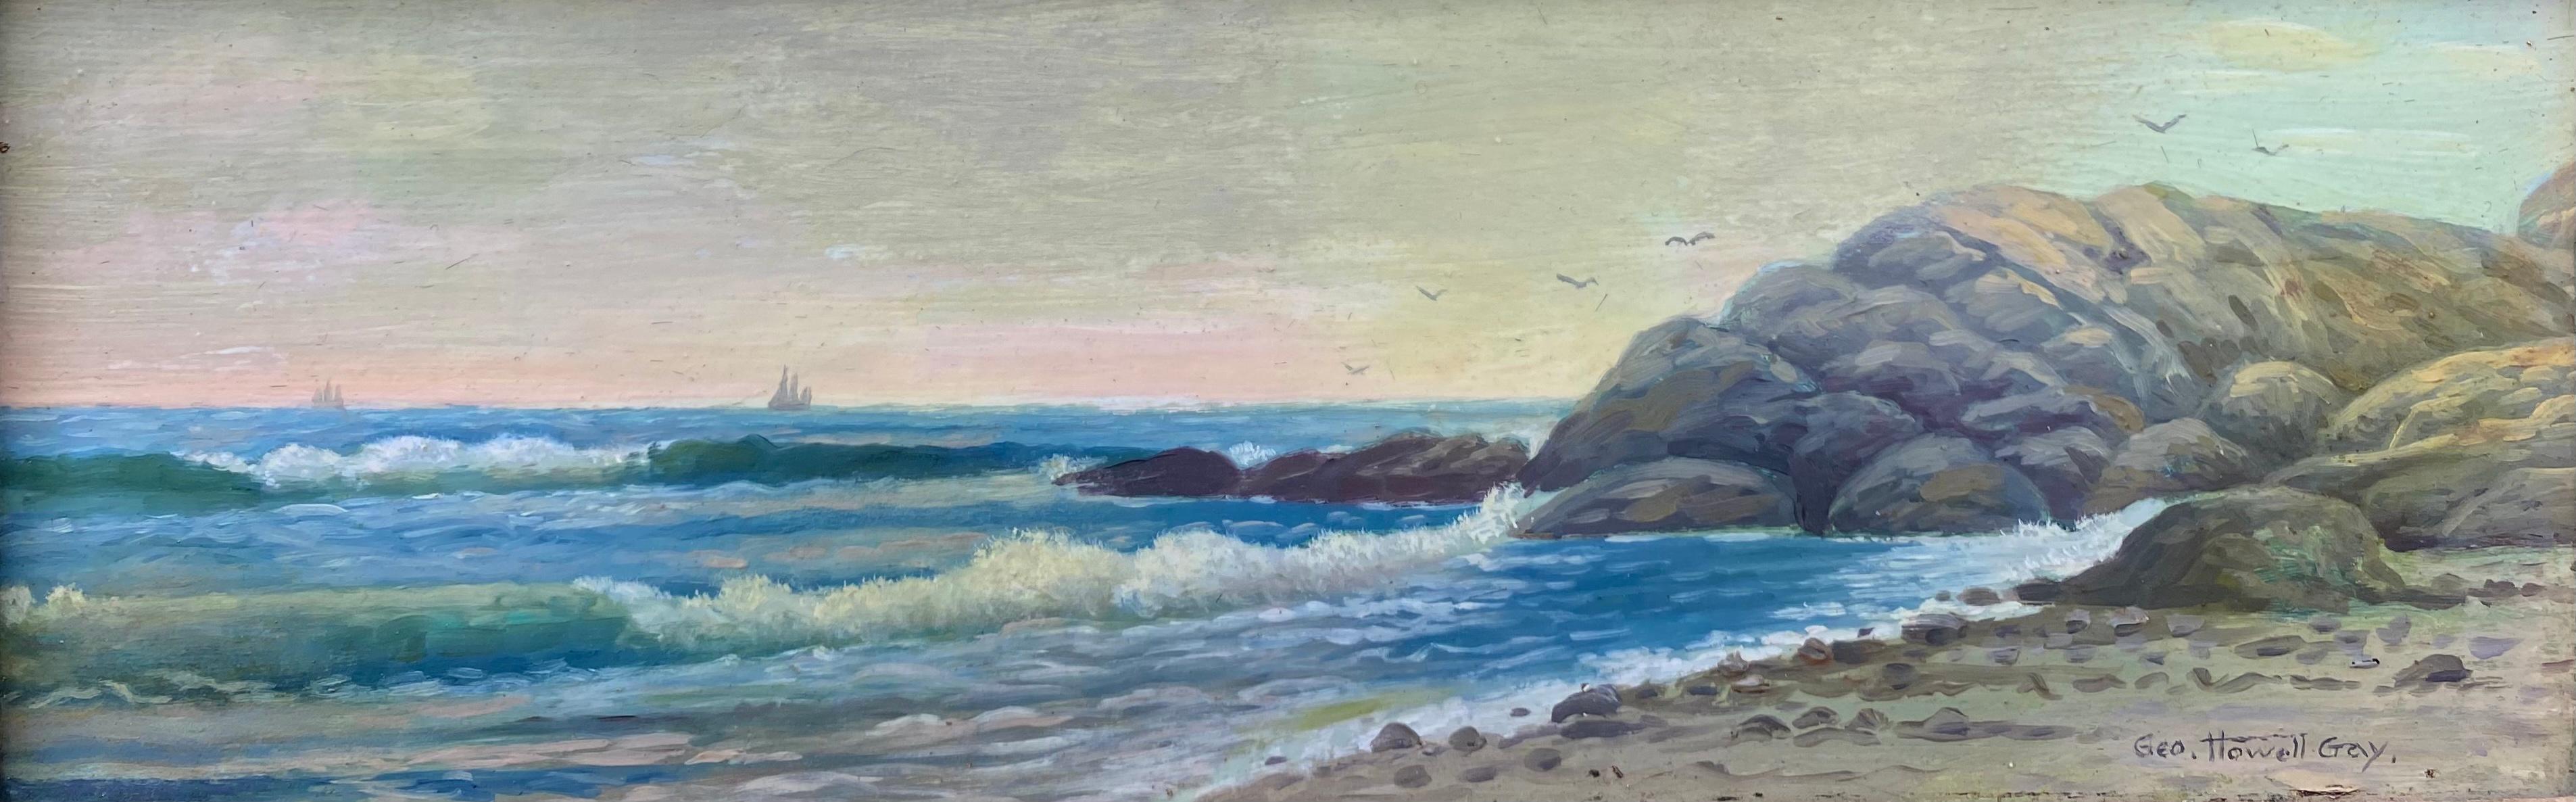 “Coastal Dawn” - Painting by George Howell Gay